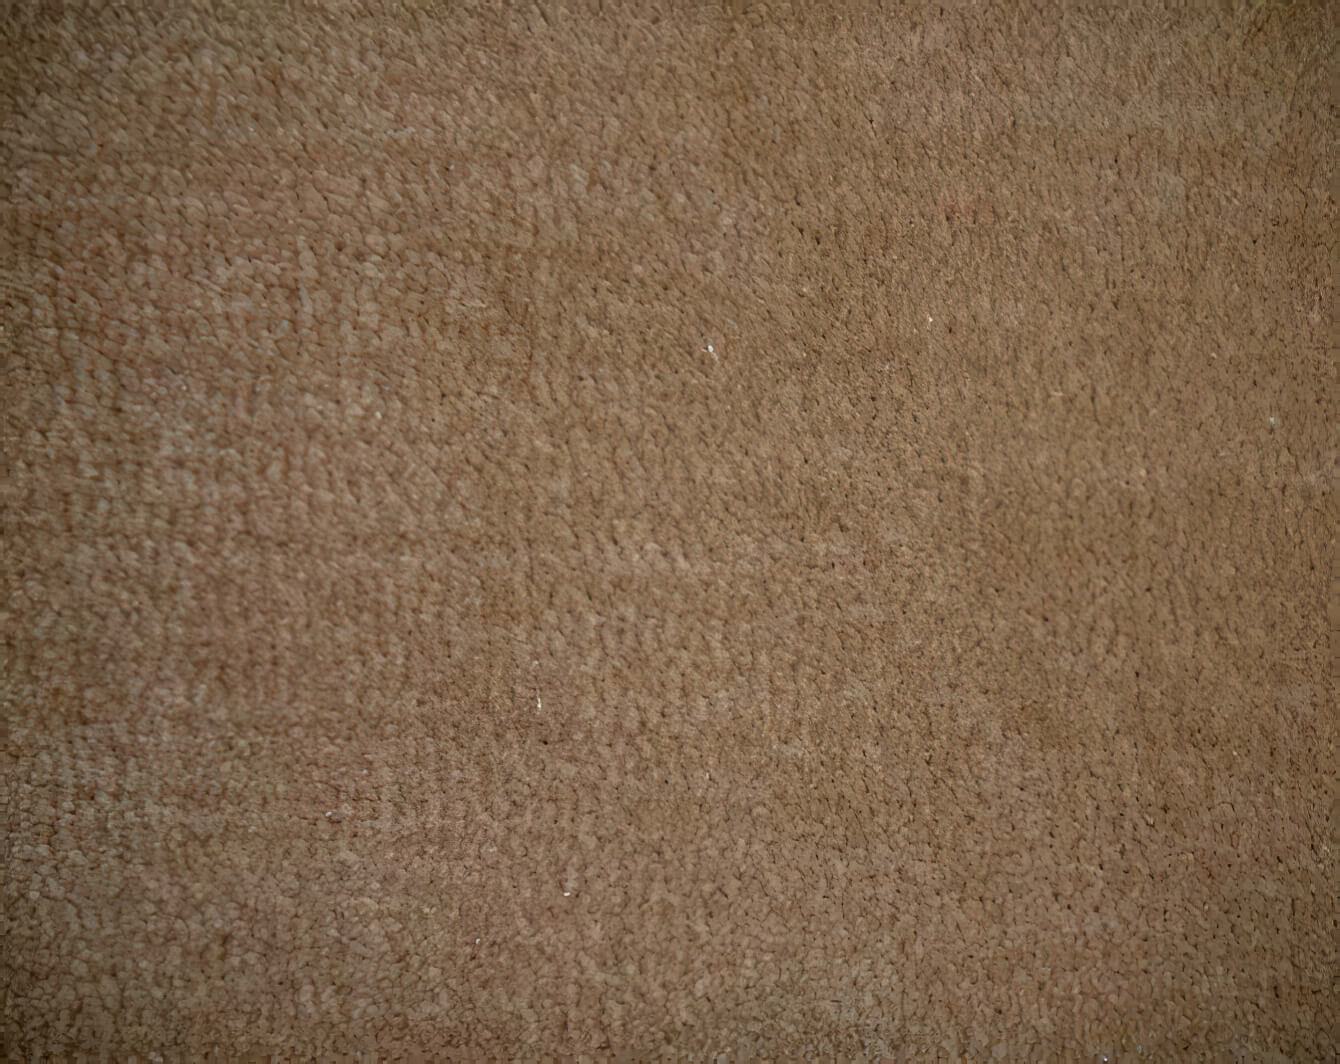 Machine Woven Carpets - Craigie Stockwell